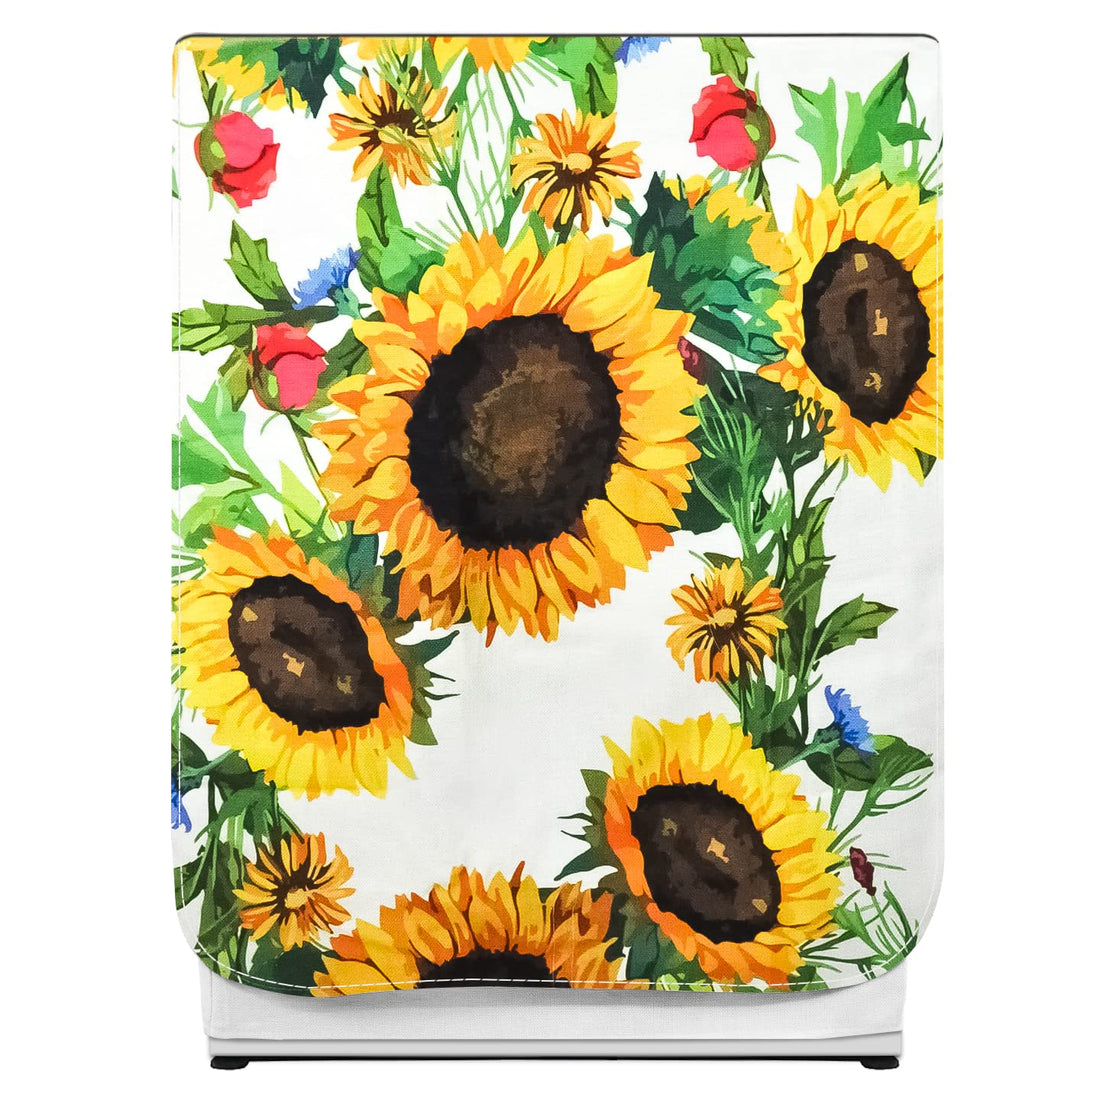 FABKUC Splash-proof, Dustproof Washer Dryer Cover Washing Machine Cover for Front-Loading Machine (Sunflower 2)